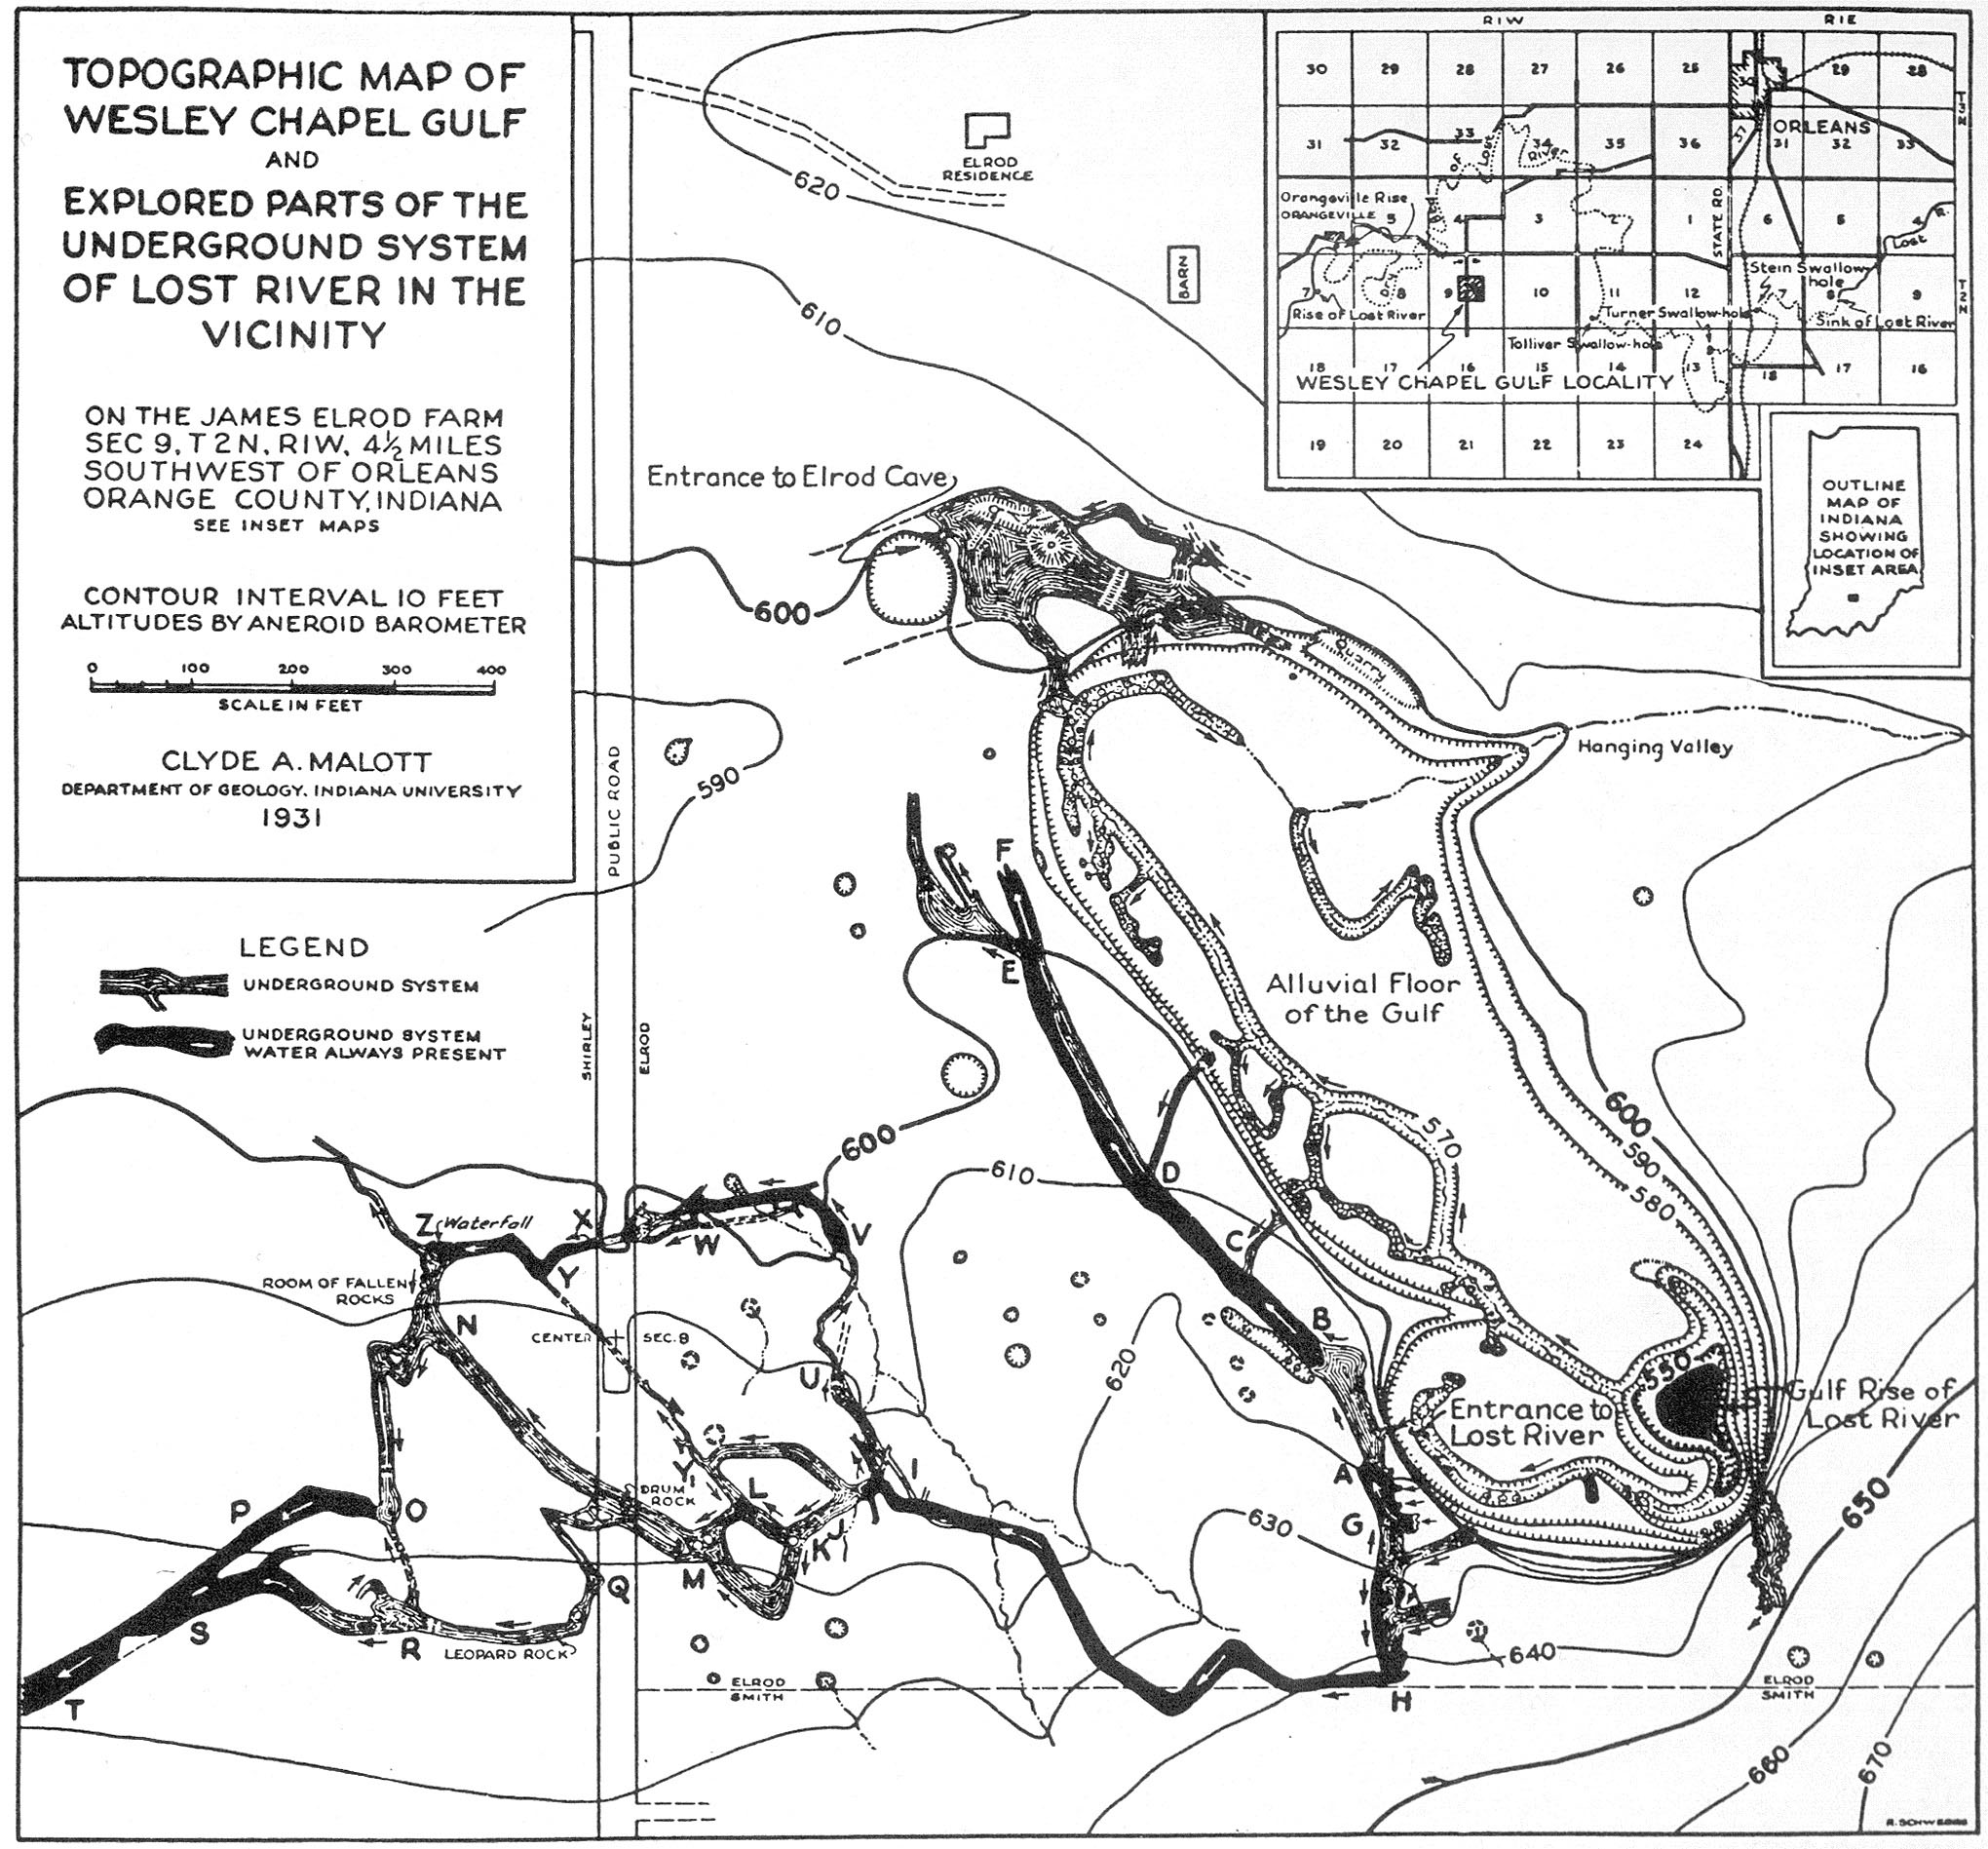 A sketch map of Wesley Chapel Gulf in Orange County, Indiana, originally drawn by Clyde A. Malott in 1931 (Malott, 1932).